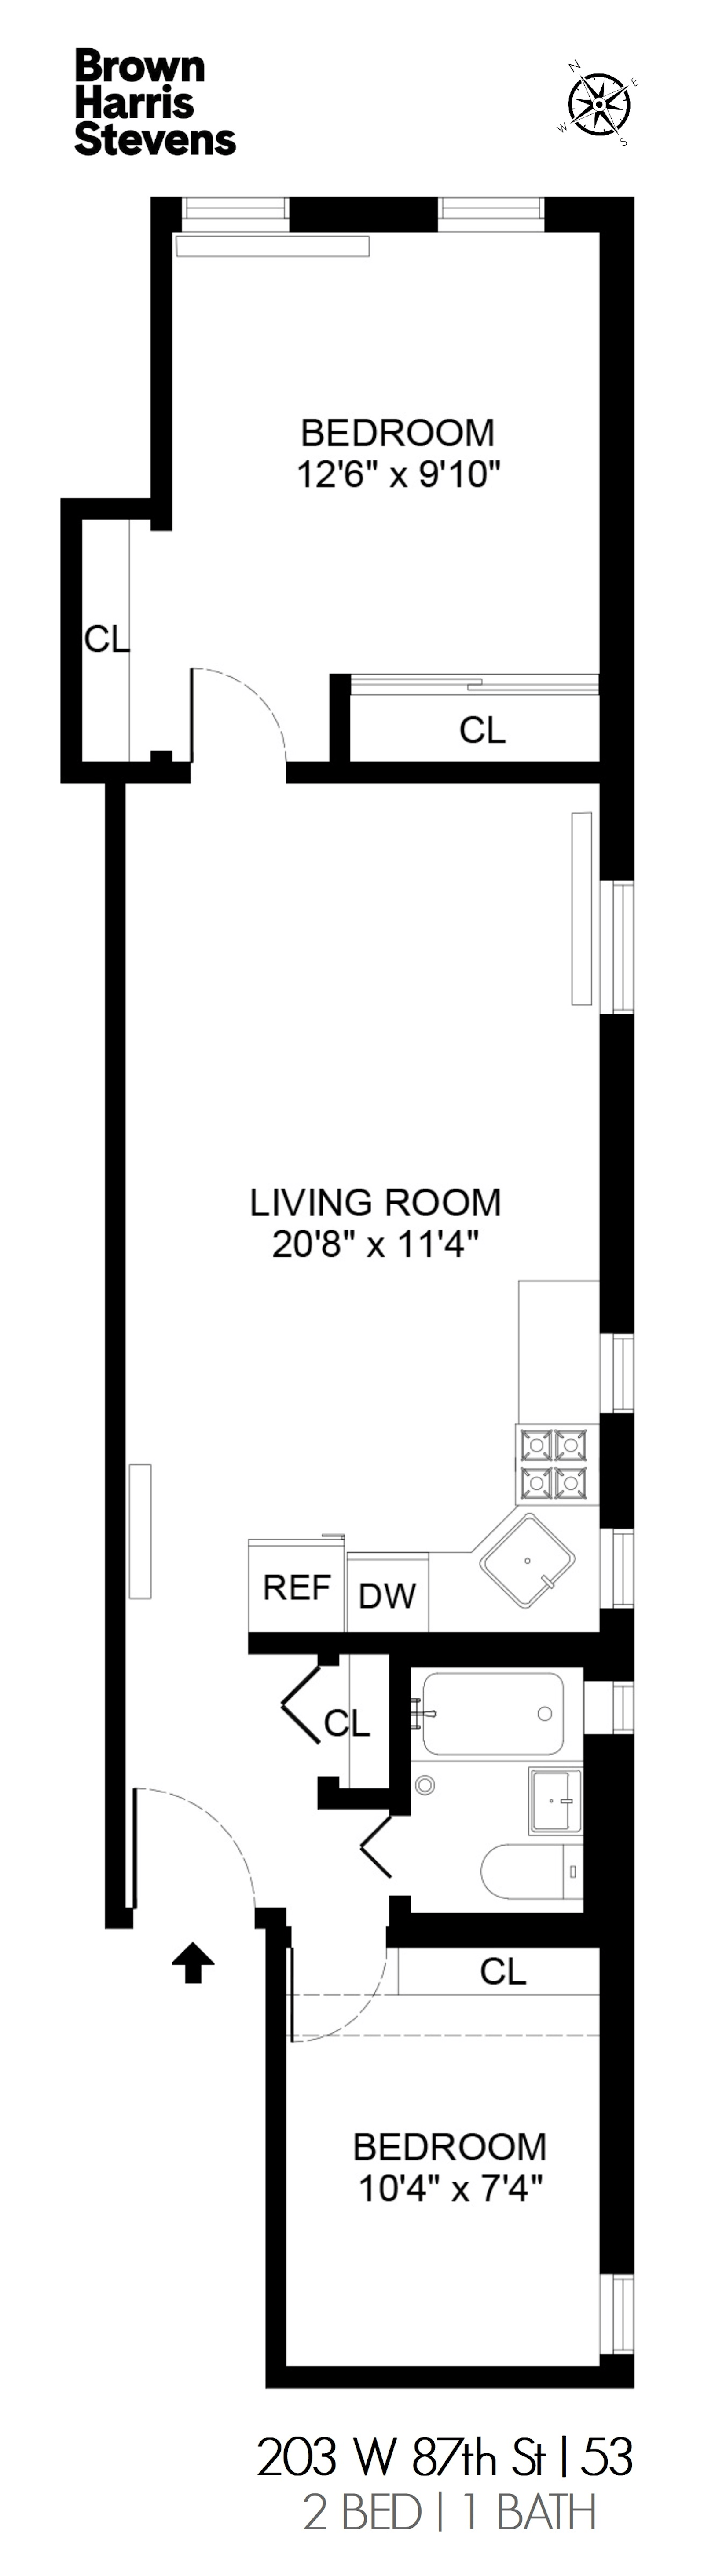 Floorplan for 203 West 87th Street, 53